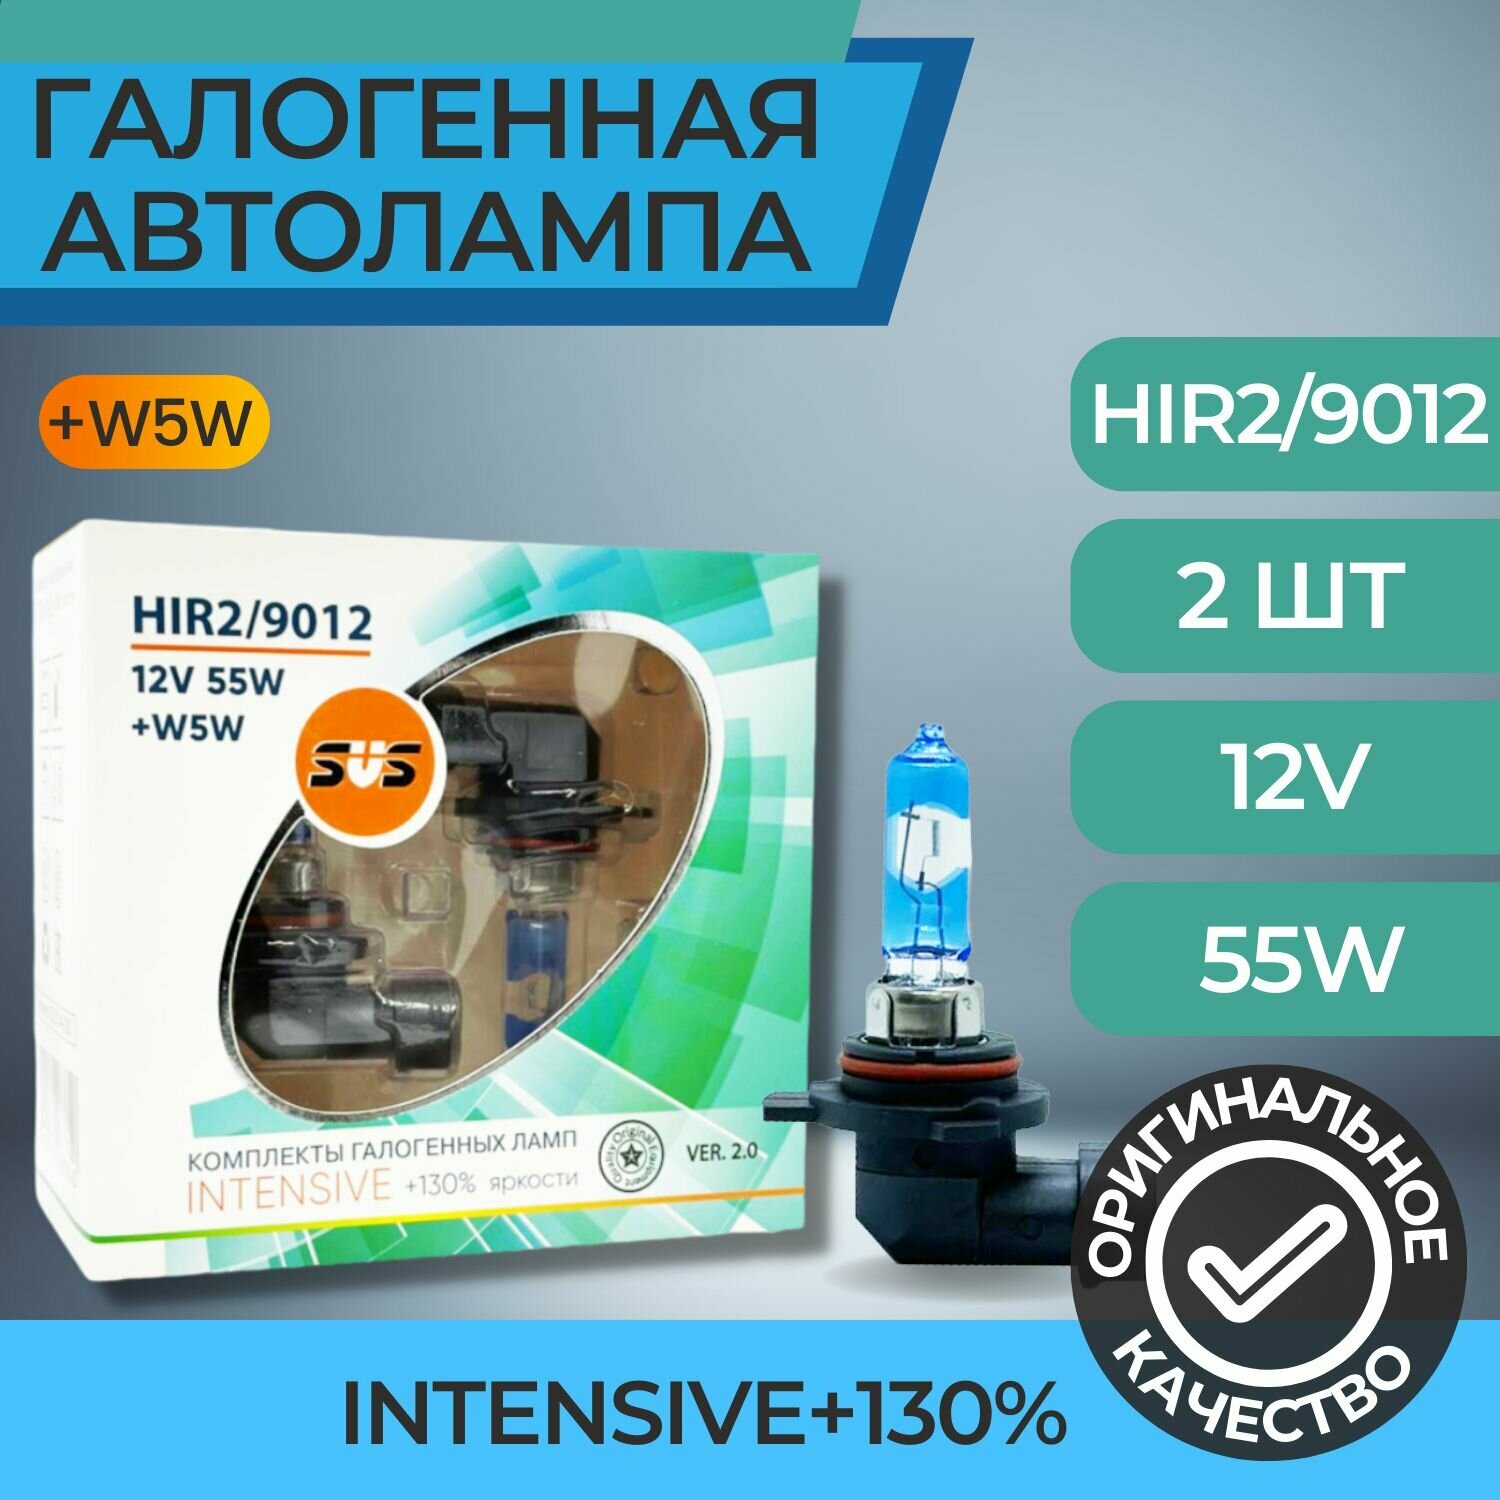 Галогенные лампы серия Intensive+130% 12V HIR2/9012 55W+W5W комплект 2шт. Ver.2.0